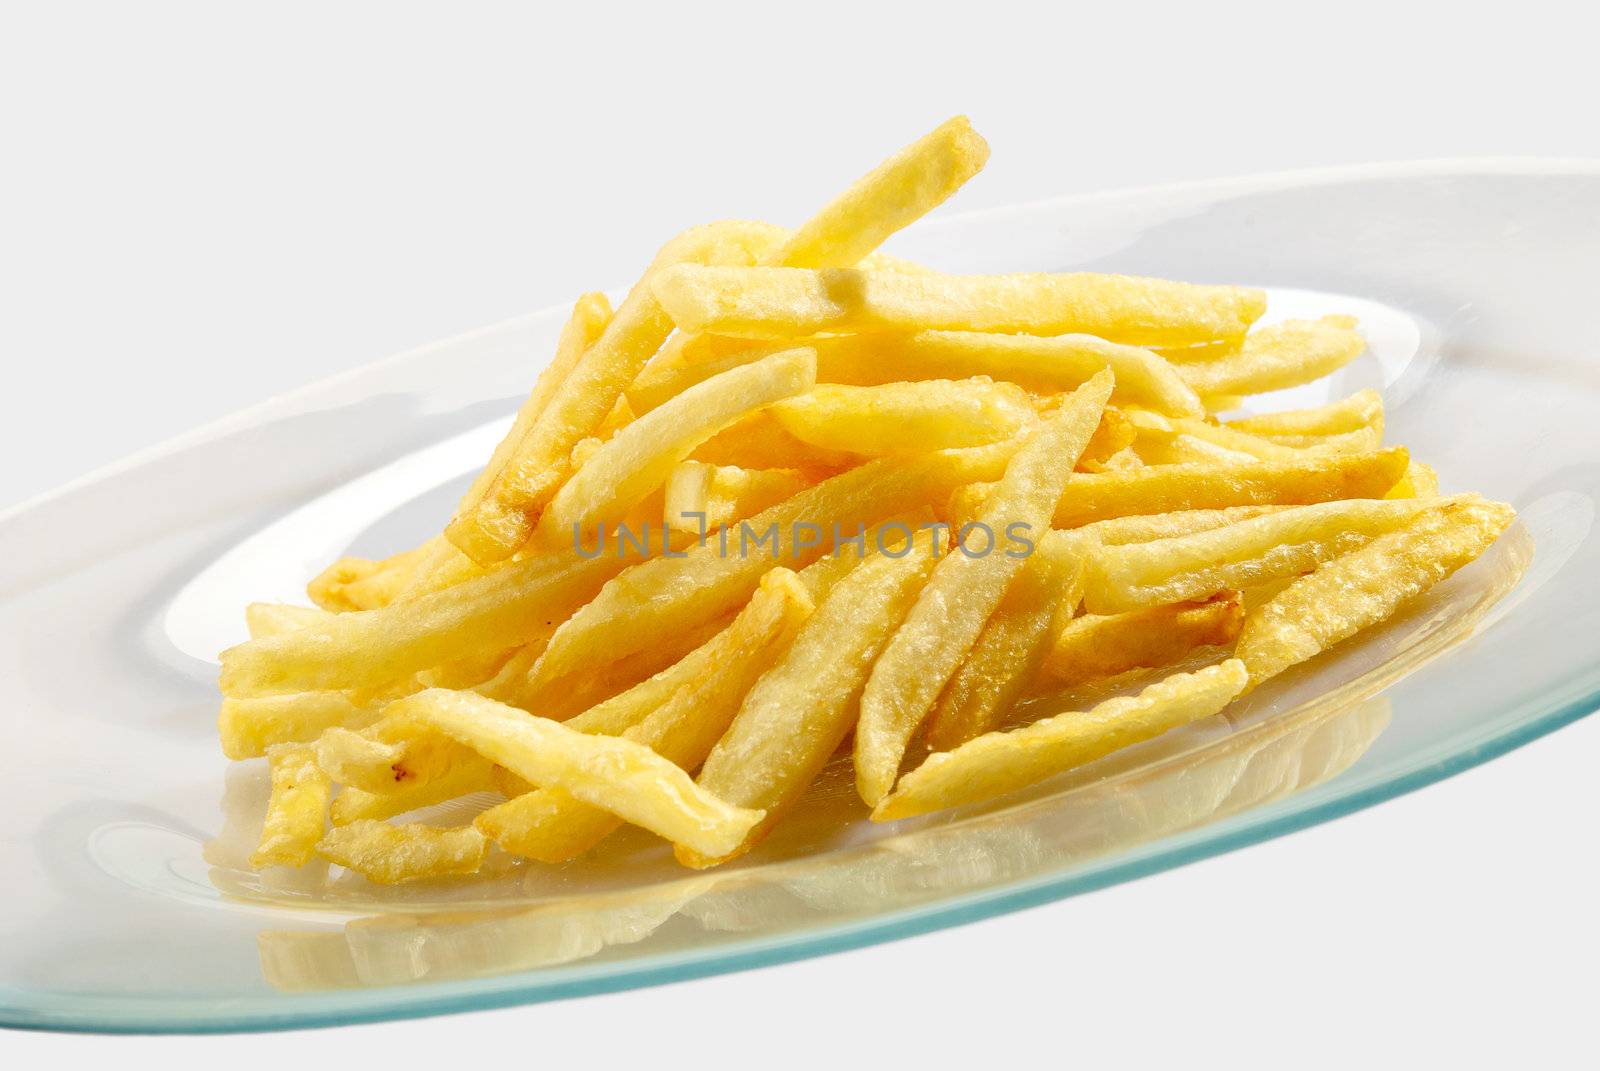 Fried potatoes on the plate by kirs-ua